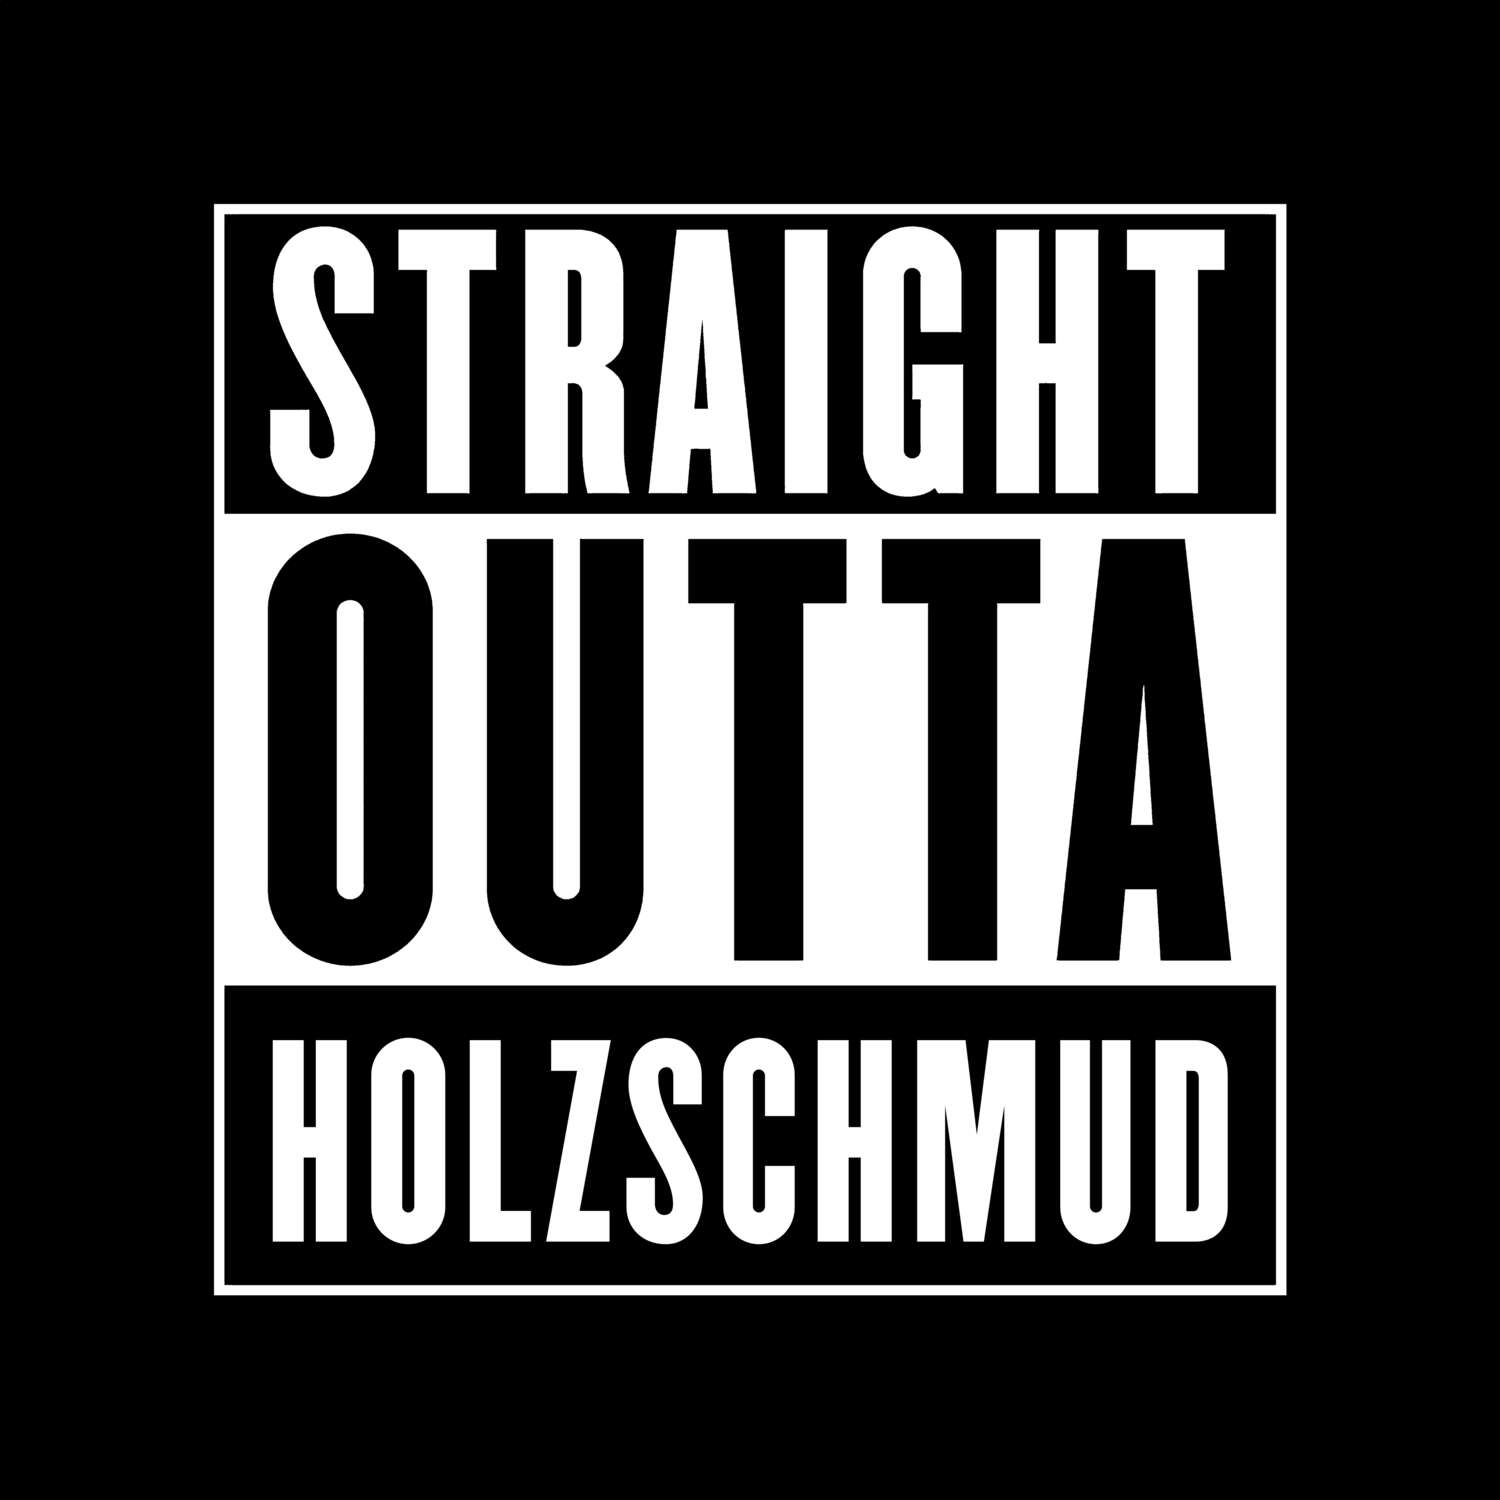 Holzschmud T-Shirt »Straight Outta«